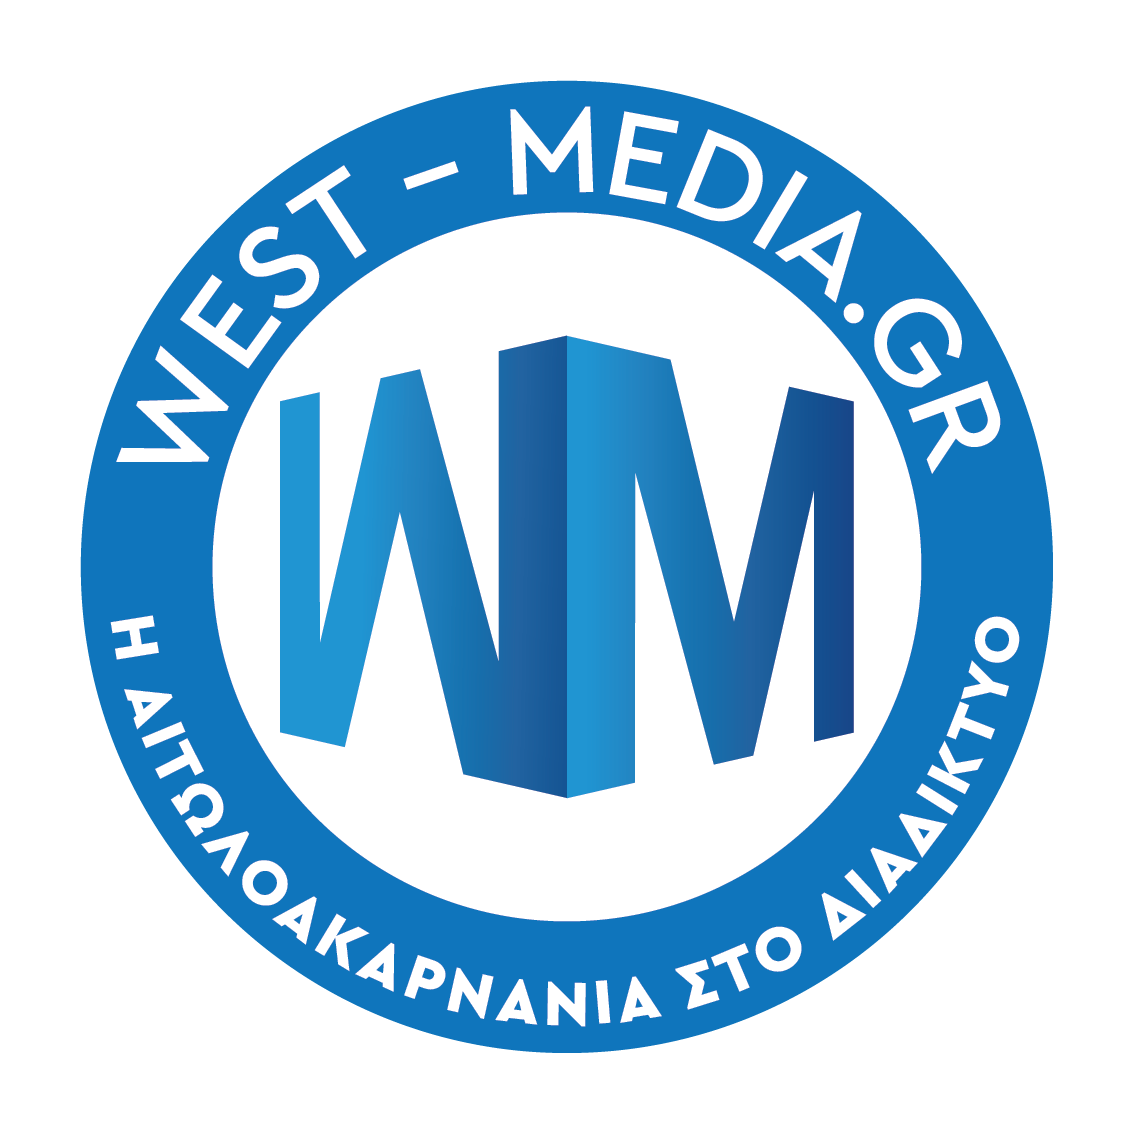 west media circle logo